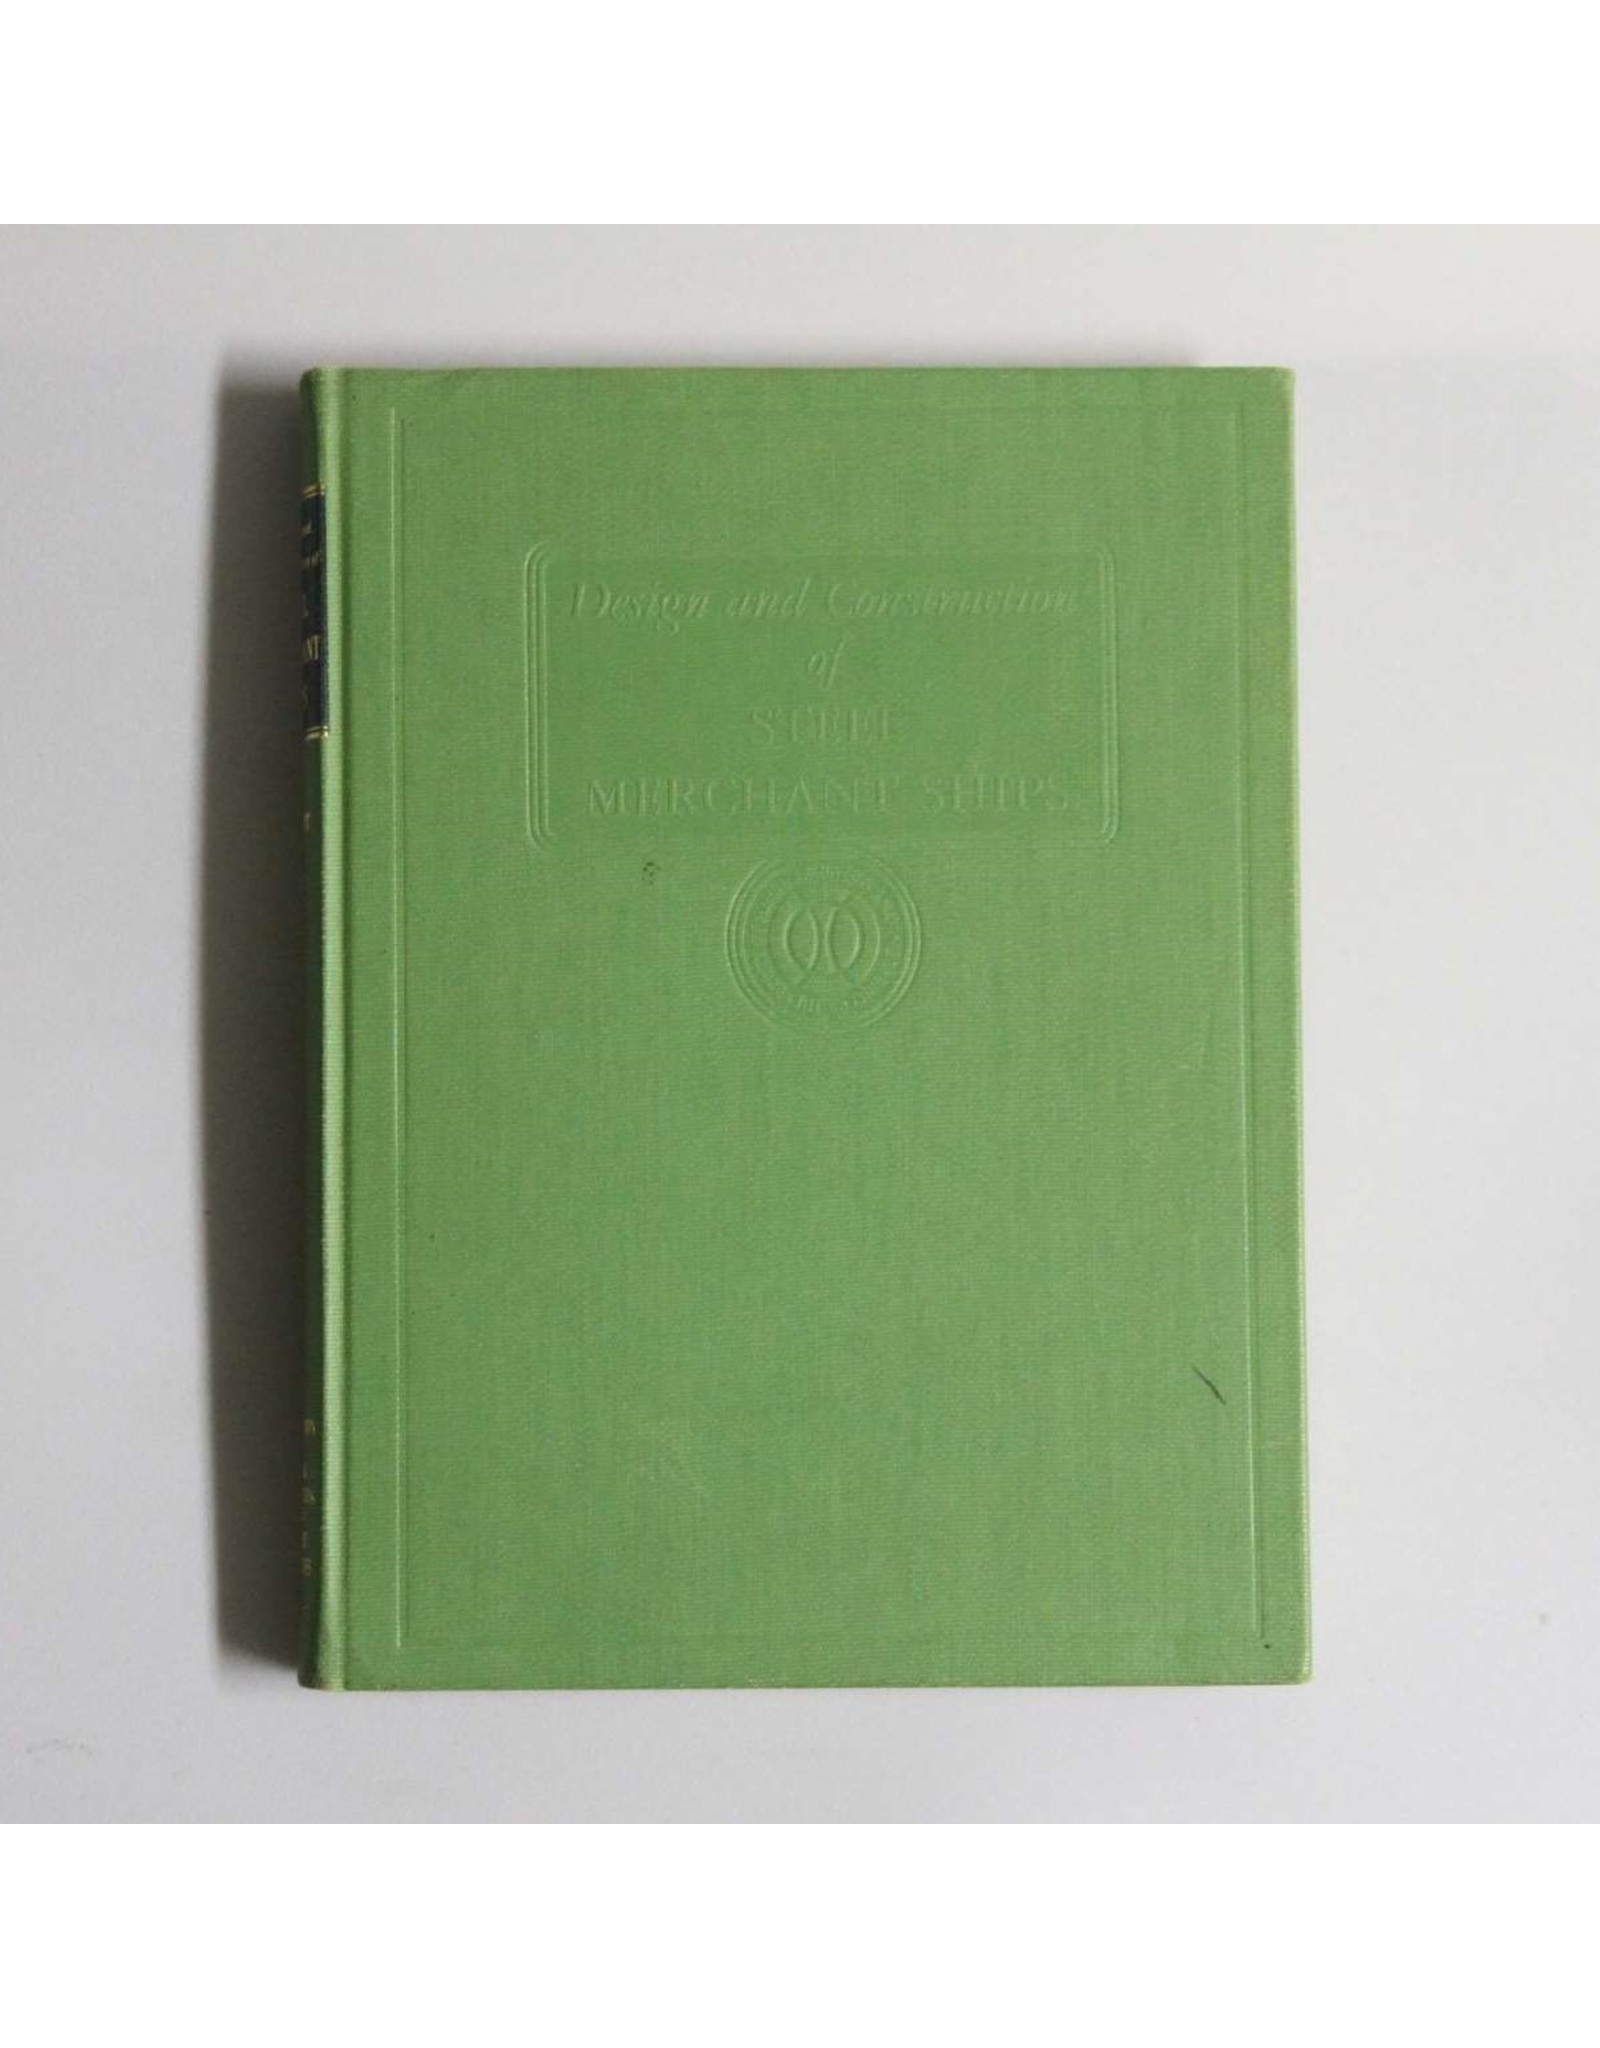 Hardcover book - Design and Construction of Steel Merchant Ships, Arnott, 1955